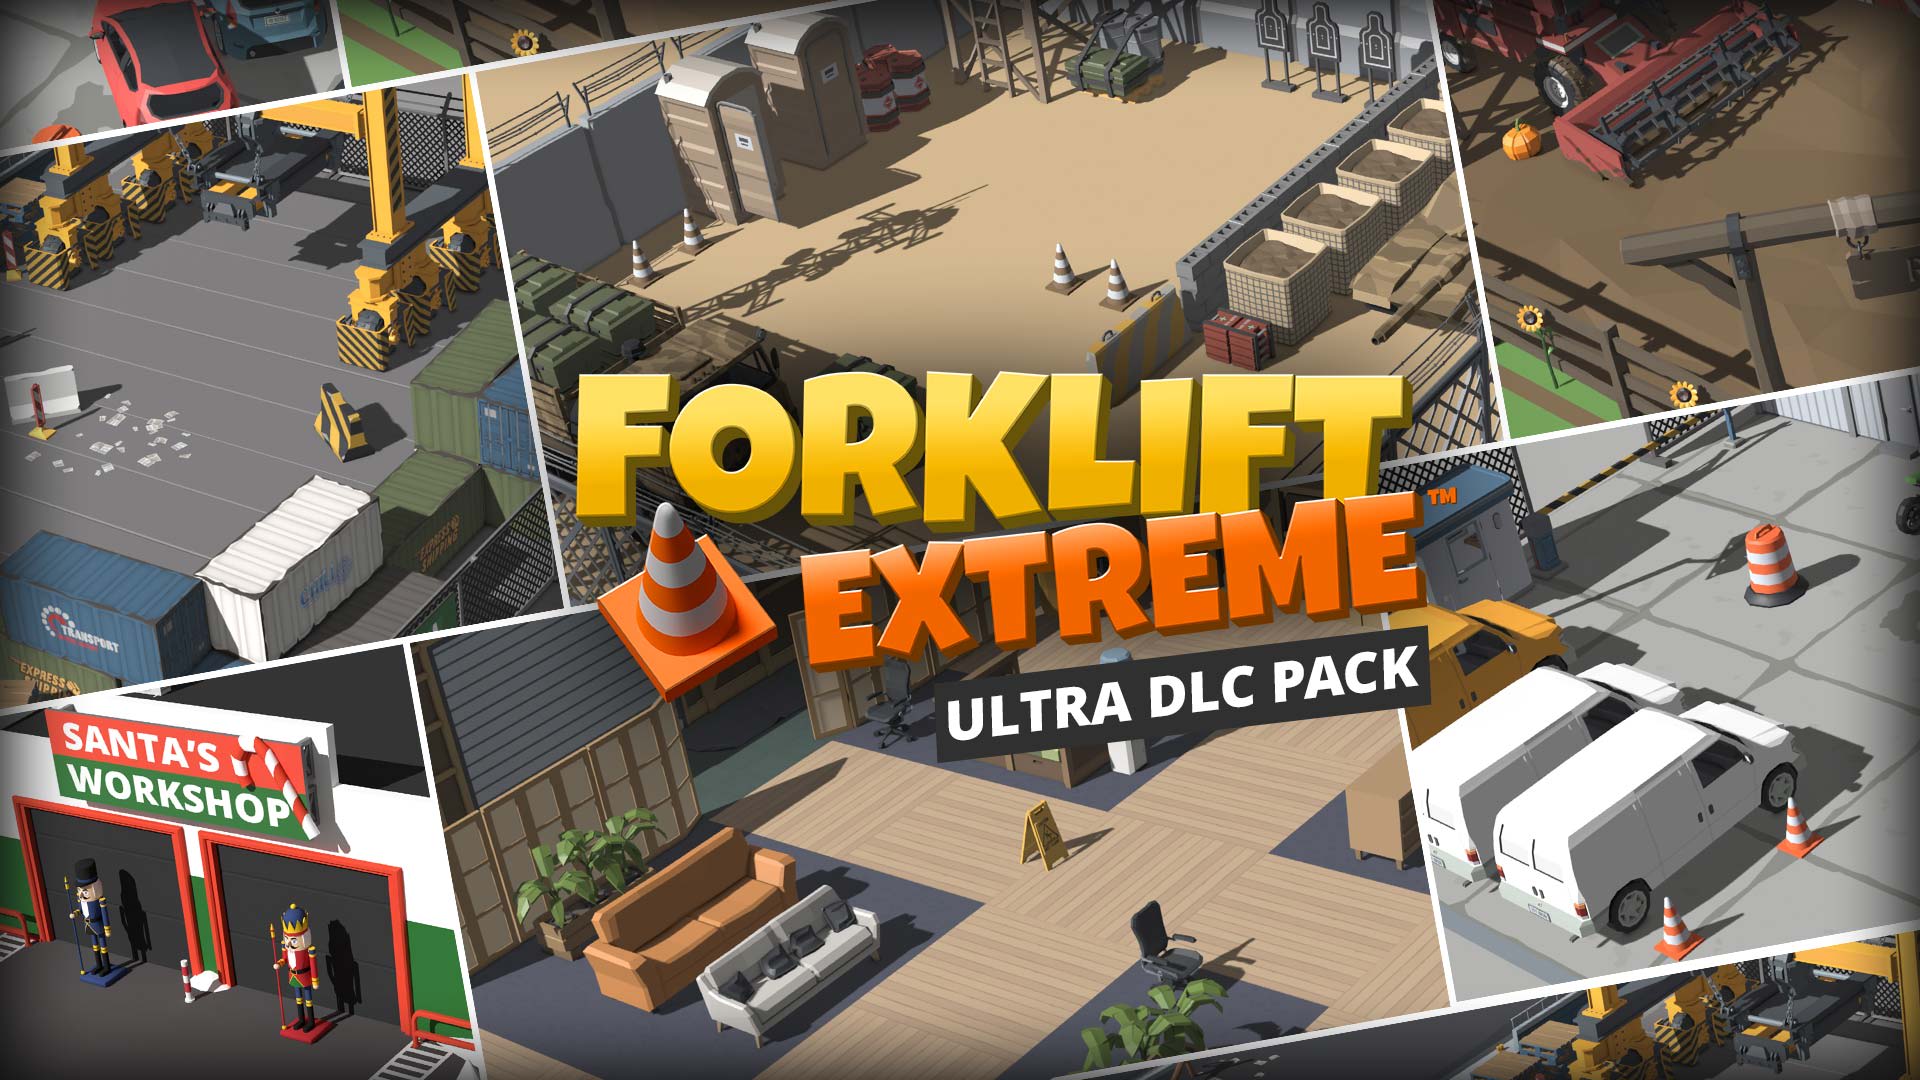 Forklift Extreme Ultra DLC Pack